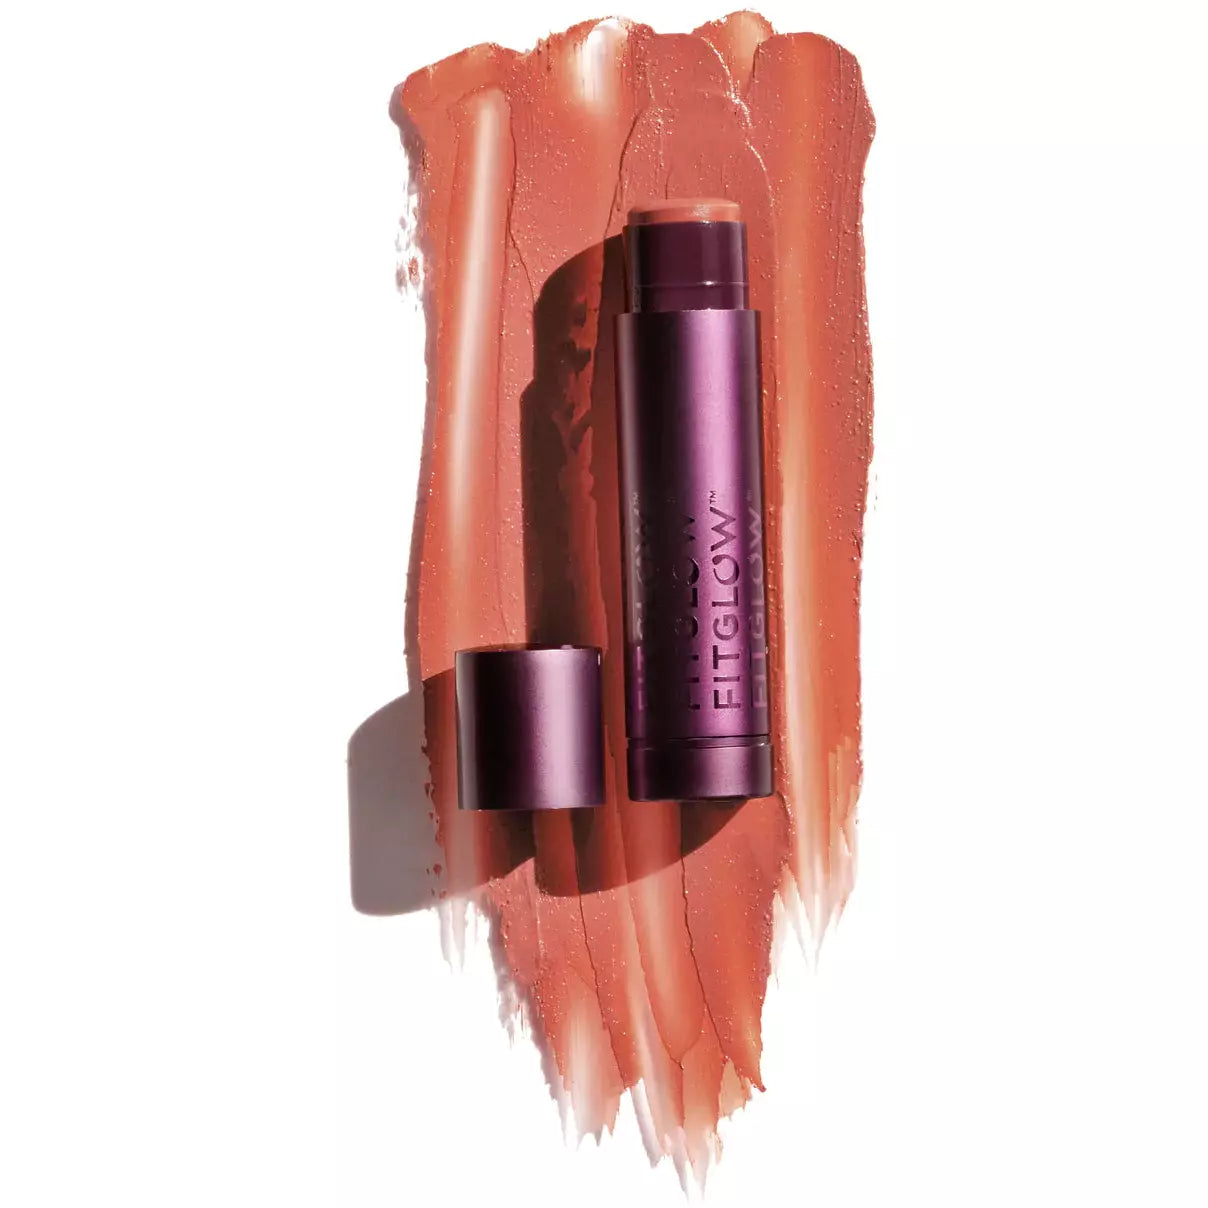 Fitglow Beauty Cloud Collagen Lipstick + Cheek